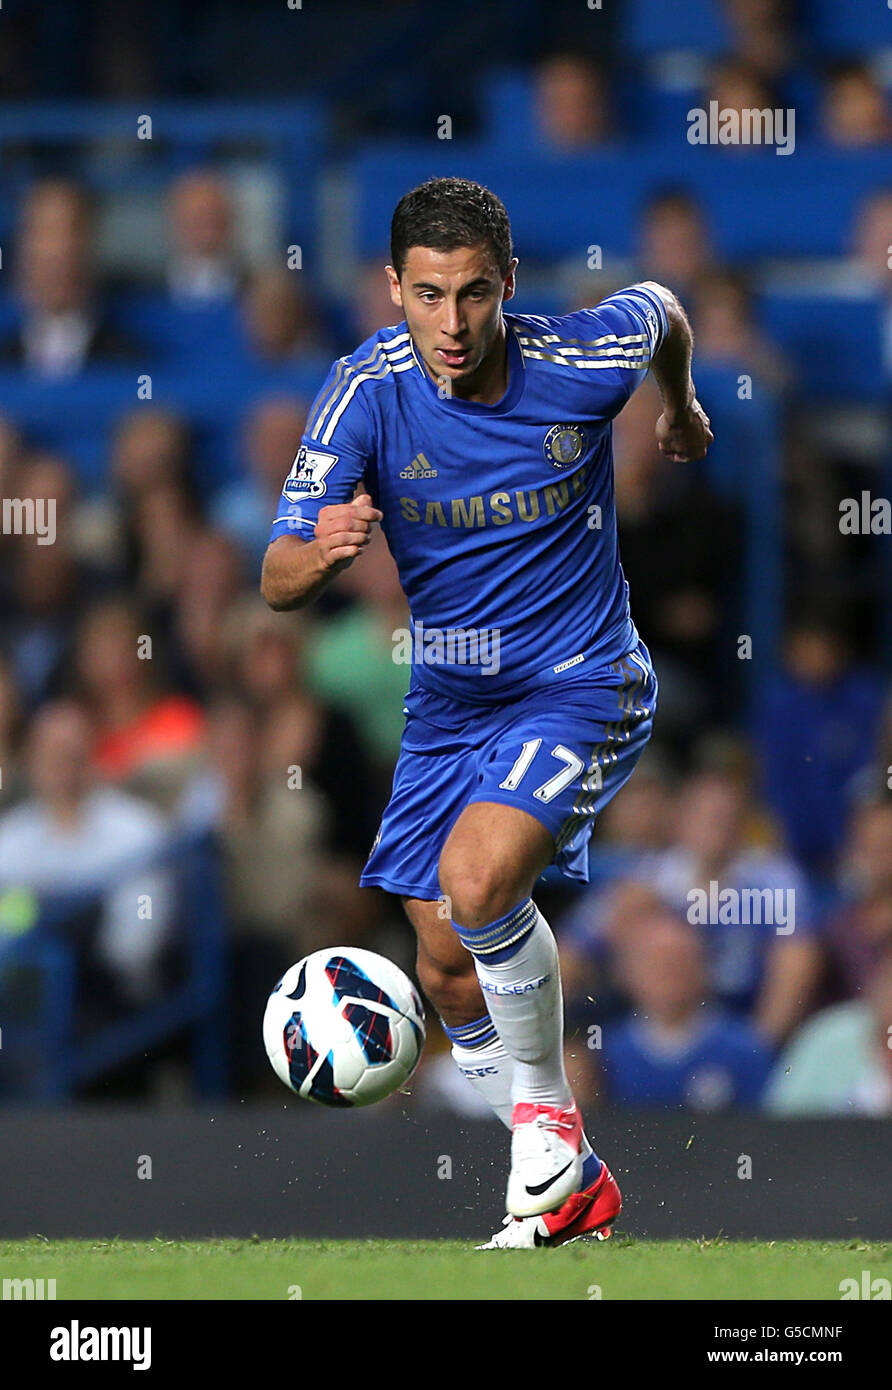 Calcio - Barclays Premier League - Chelsea v Reading - Stamford Bridge. Eden Hazard, Chelsea Foto Stock